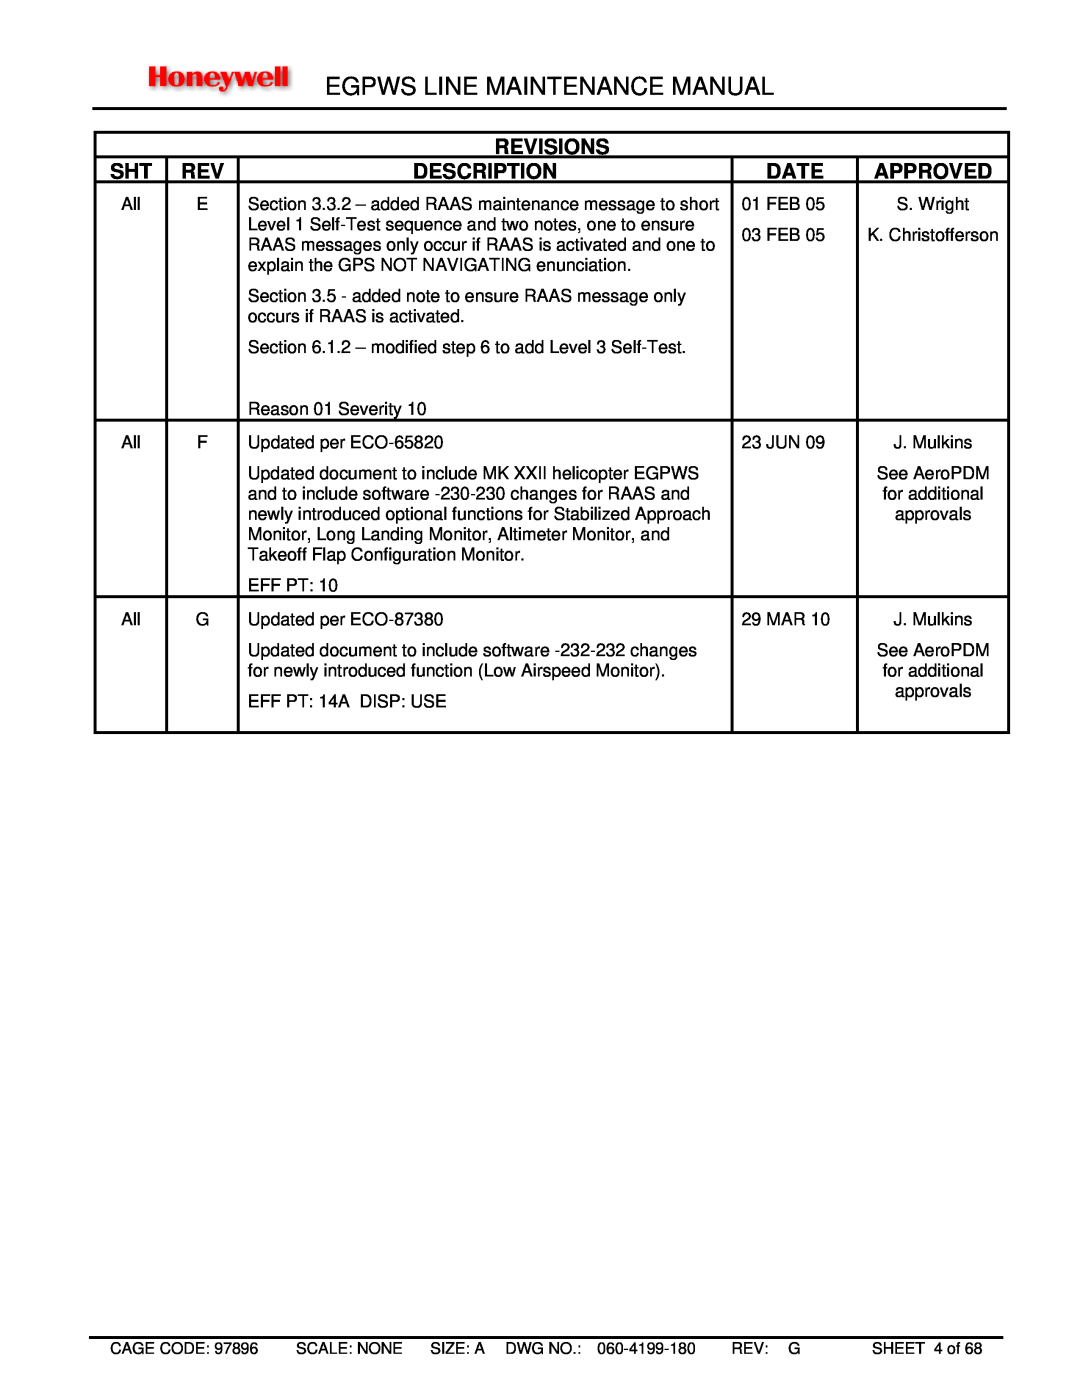 Honeywell MK VIII, MK XXII manual Egpws Line Maintenance Manual, Revisions, Description, Date, Approved 